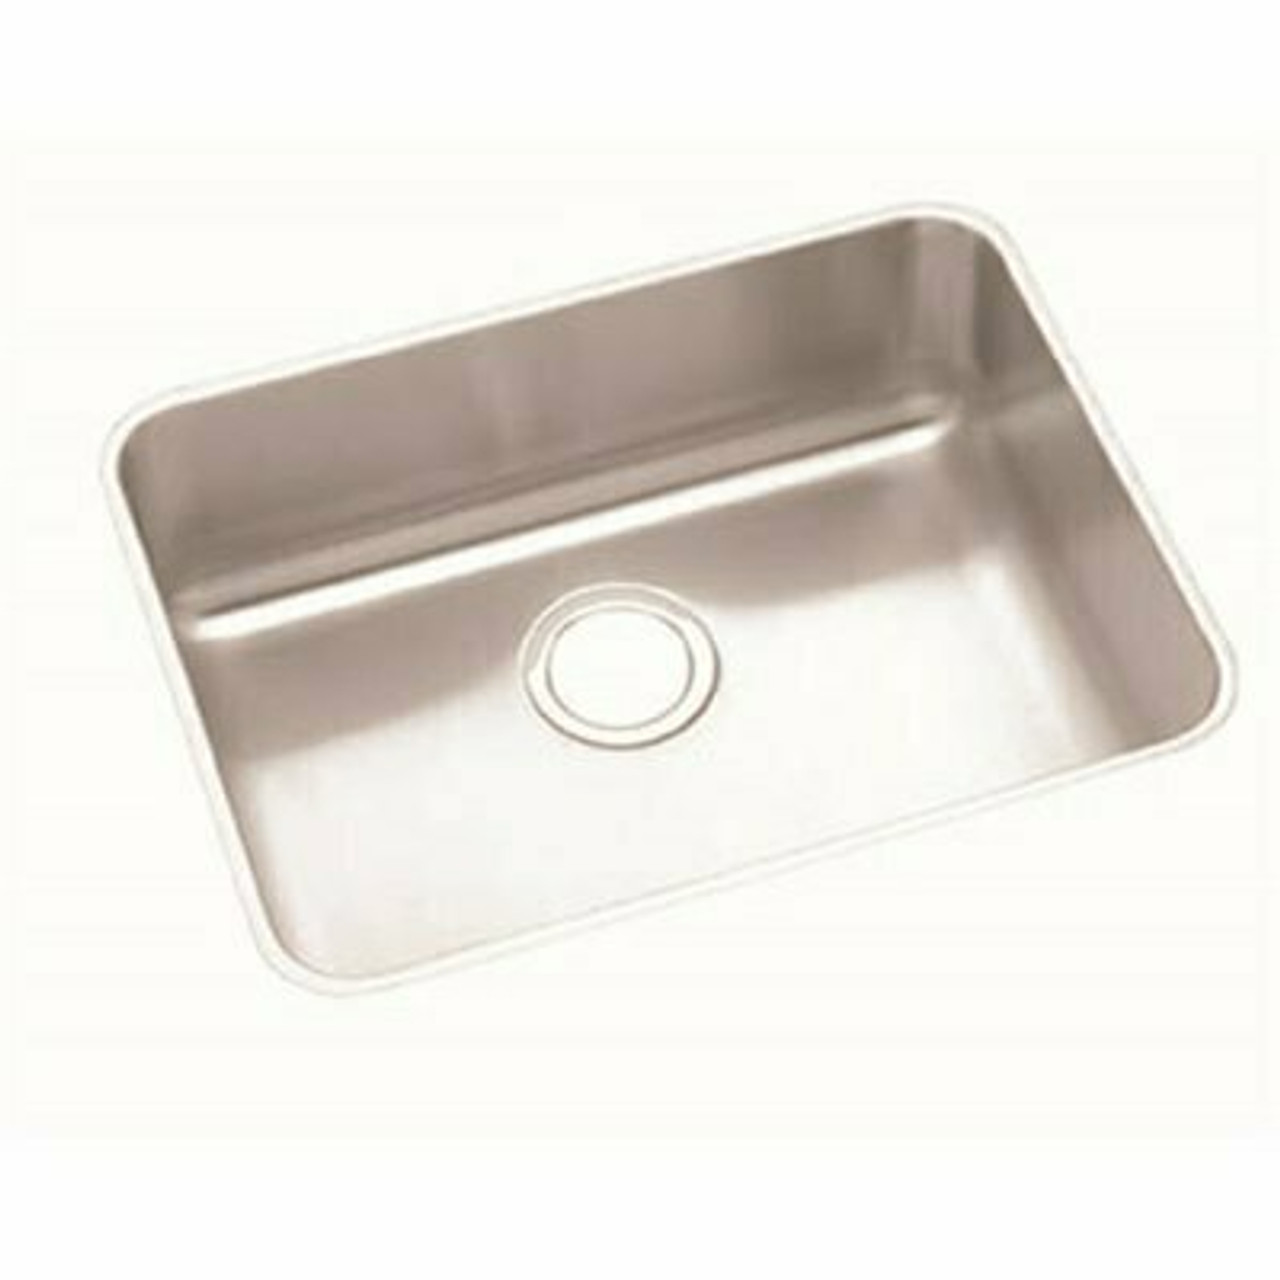 Elkay Gourmet Undermount Stainless Steel 24 In. Single Bowl Ada Compliant Kitchen Sink